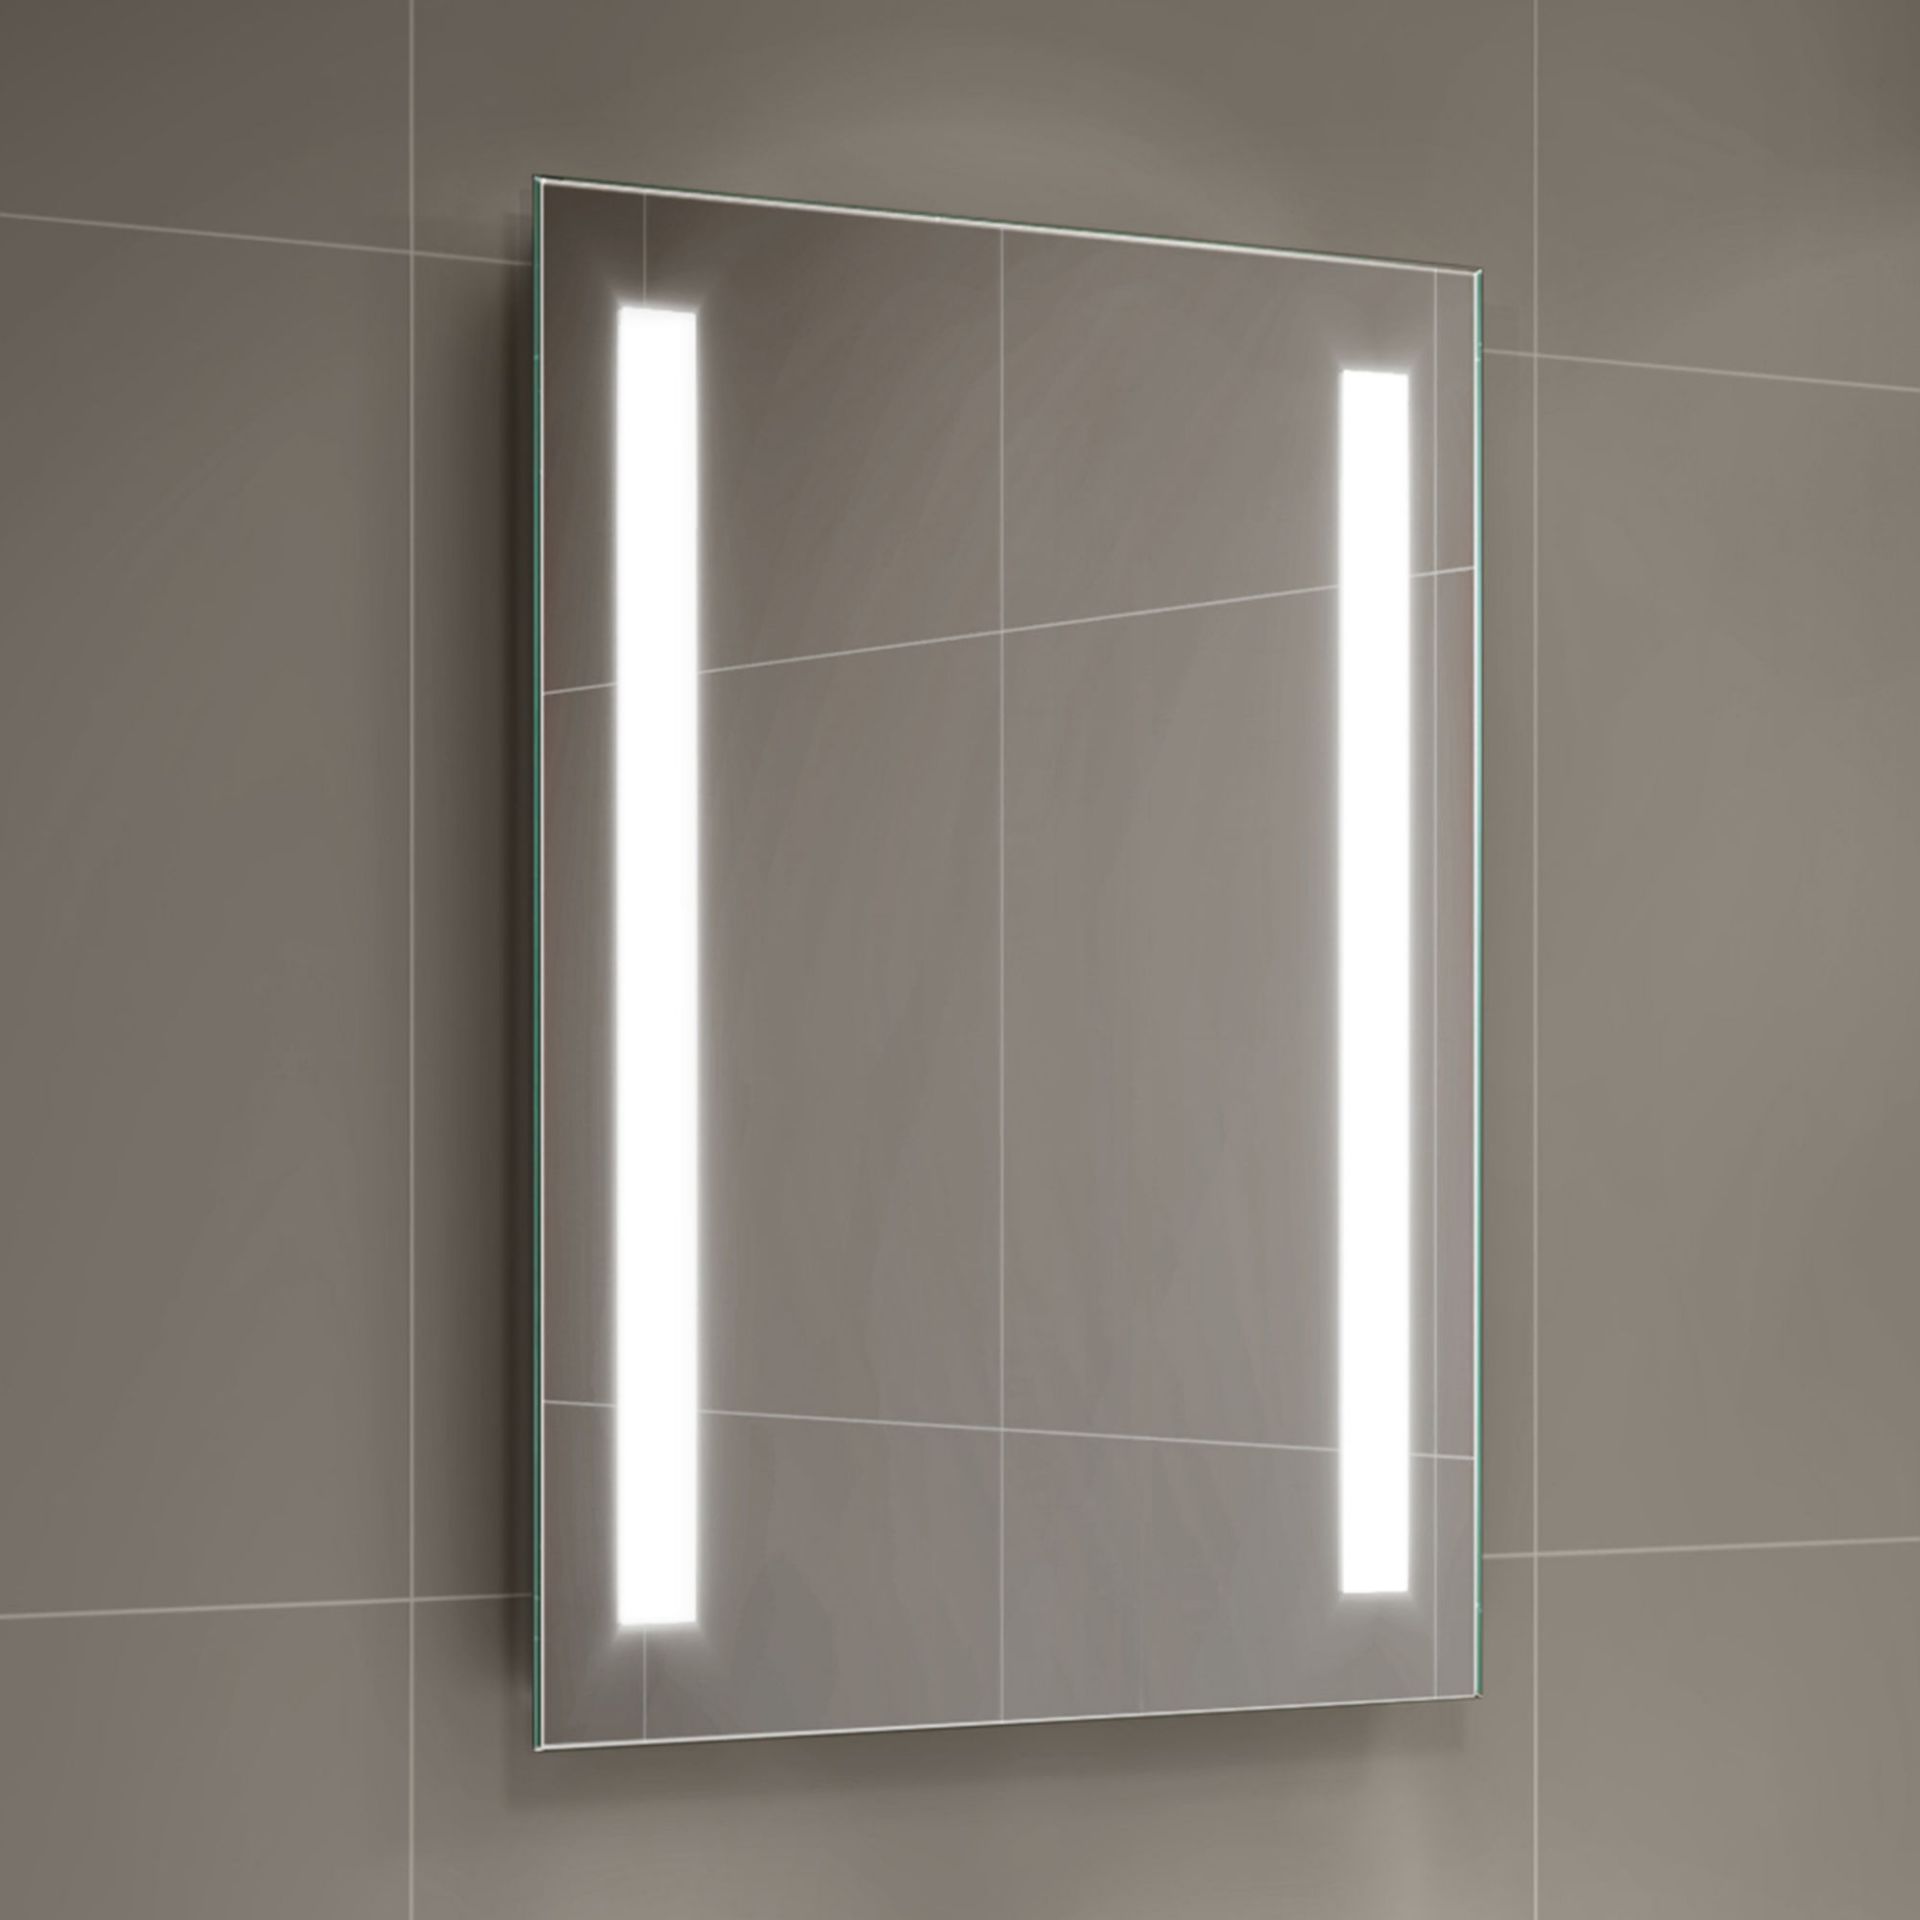 New 600 x 450mm Omega Illuminated Led Mirror. RRP £499.99.Ml2108.energy Saving Controlled On ...